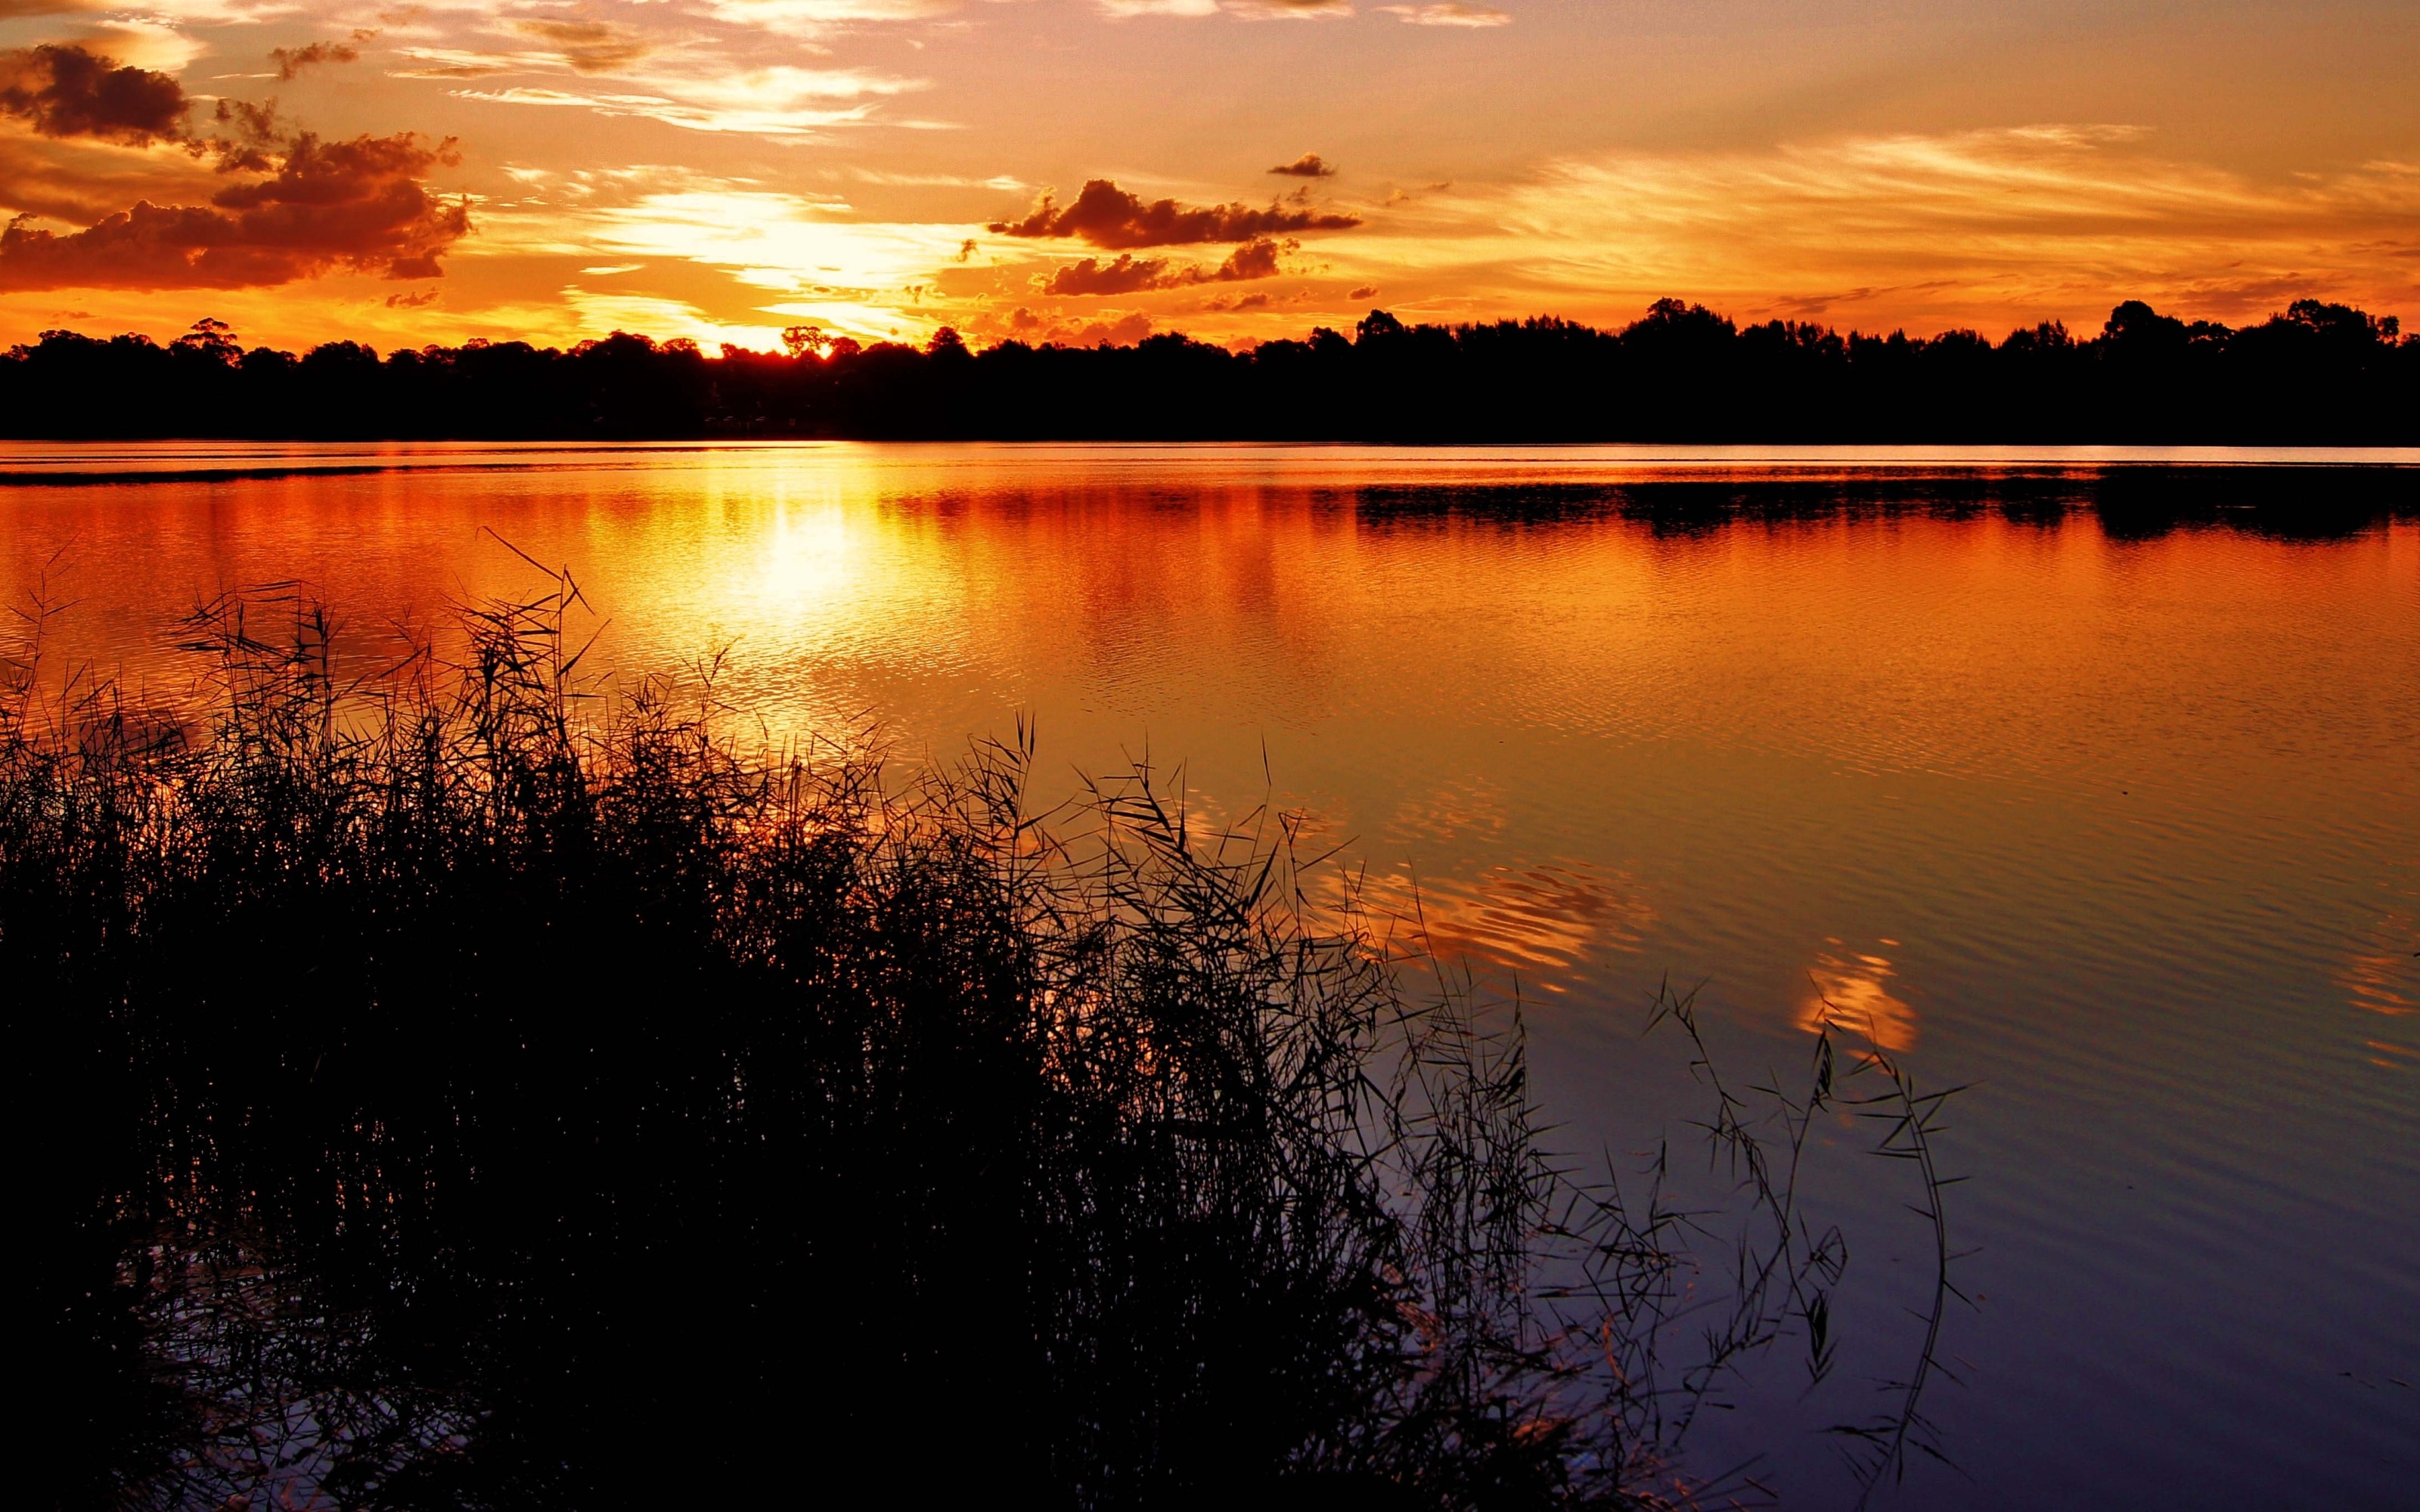  sunset at the lake HD Desktop Wallpaper HD Desktop Wallpaper